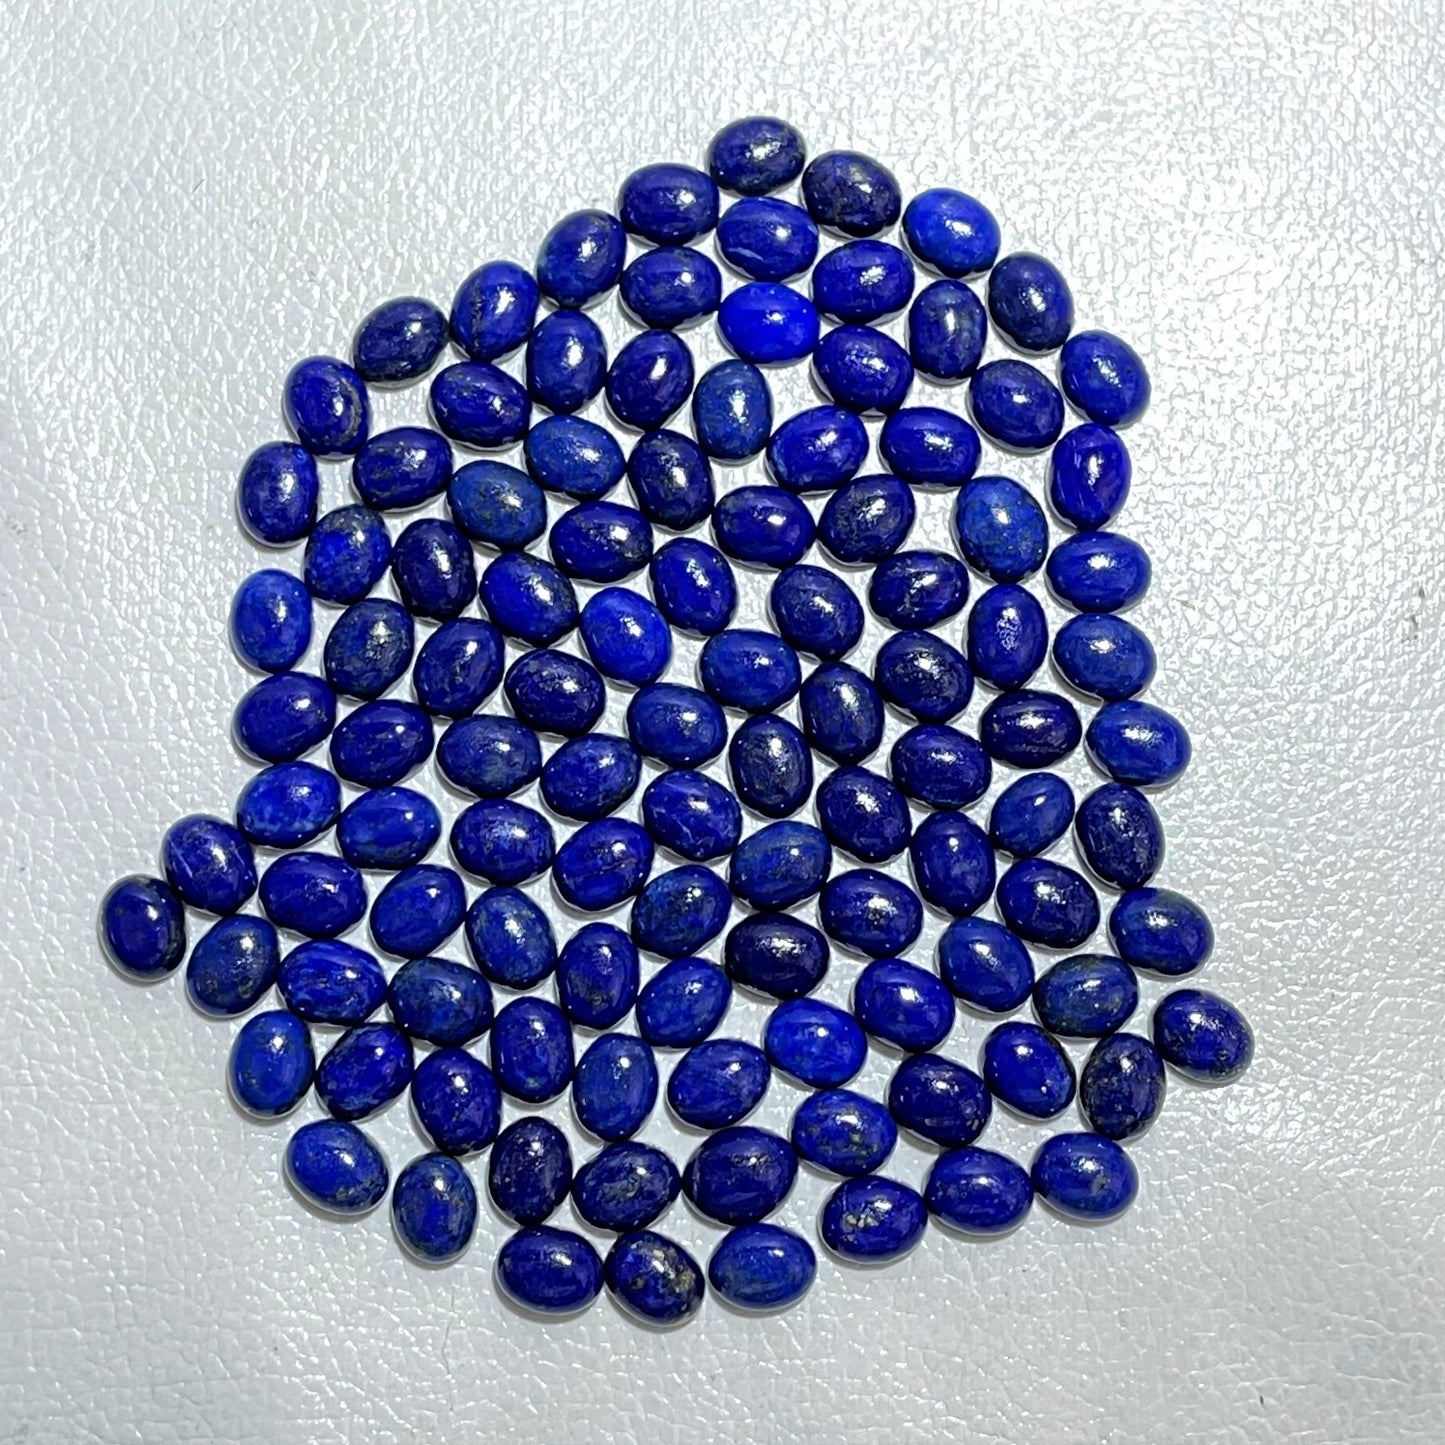 Natural Lapis Lazuli 8x10 mm Oval Cabochon (Natural)